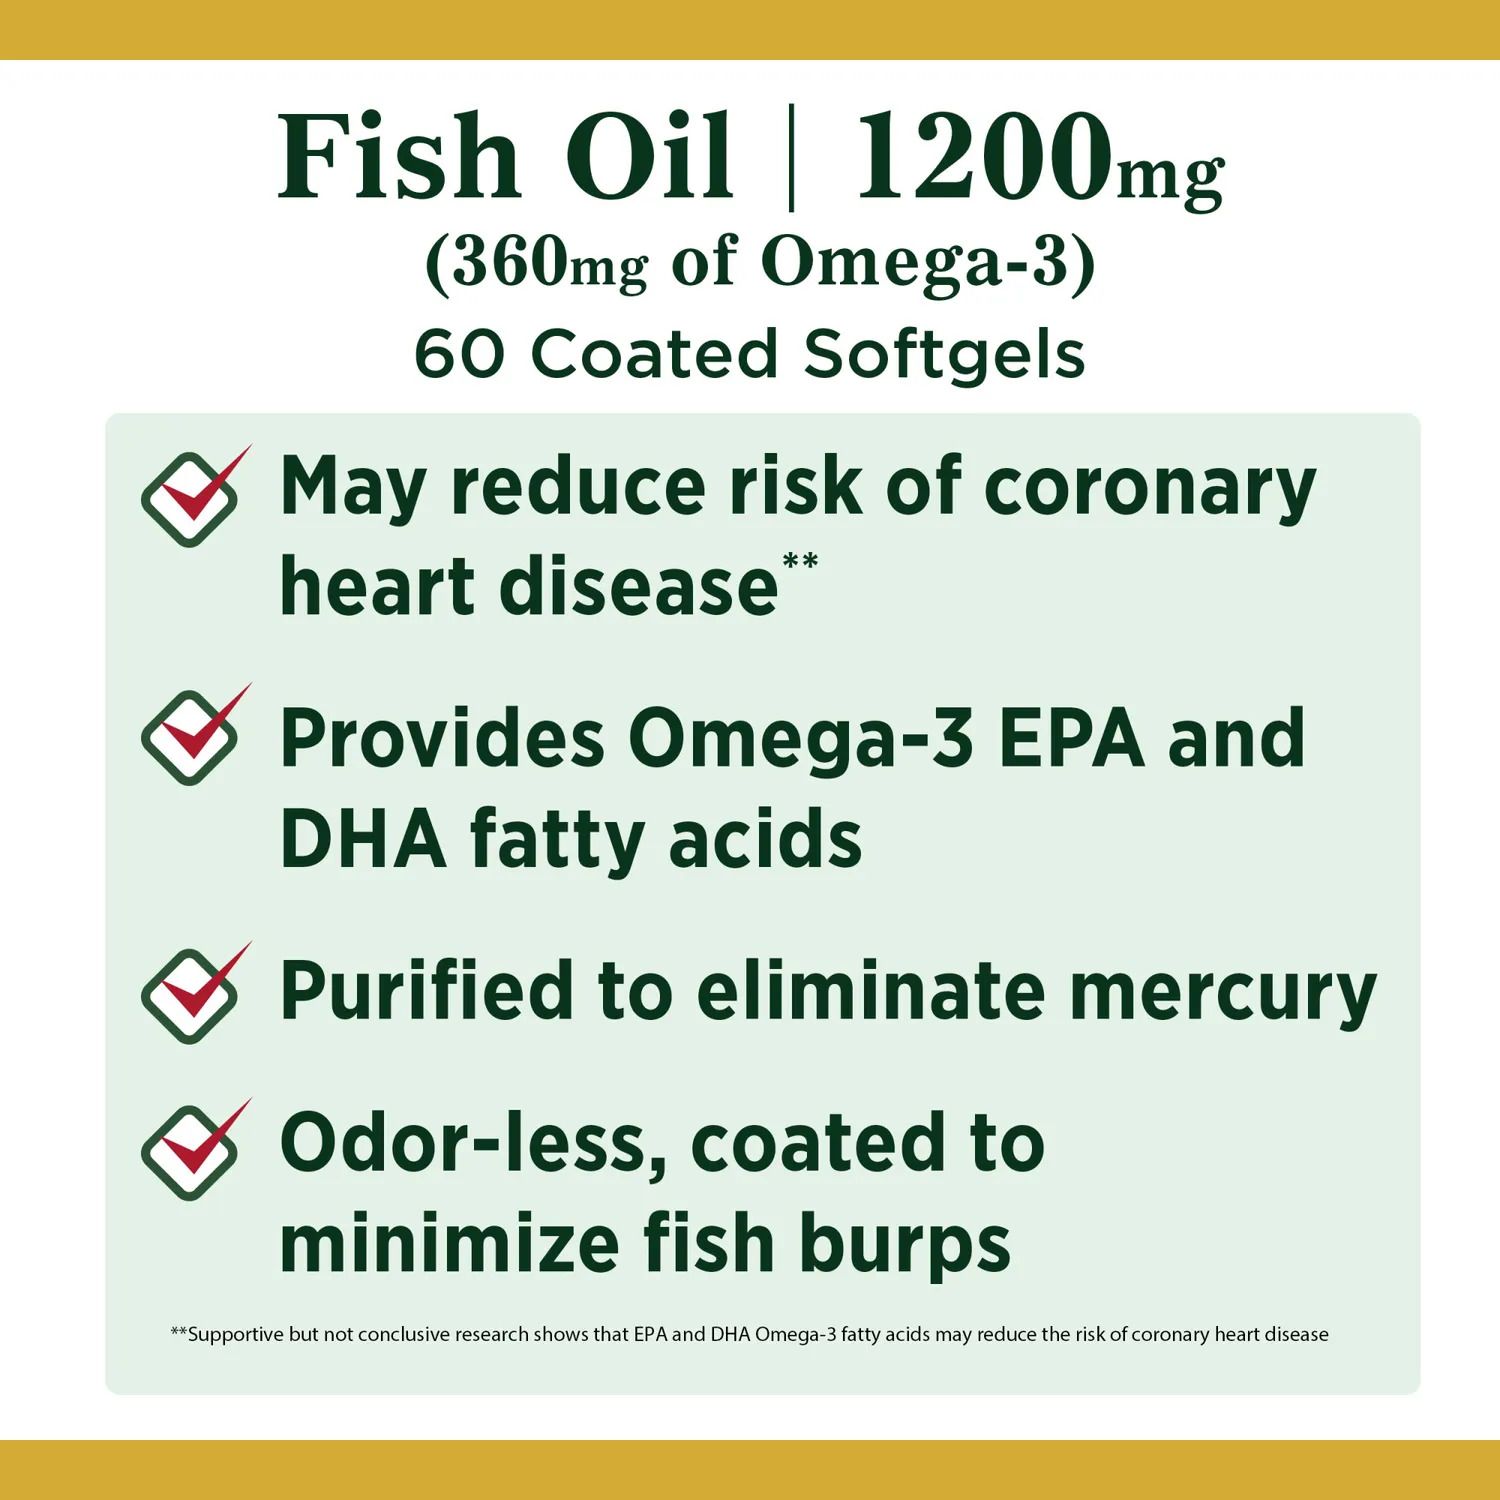 Nature's Bounty Fish Oil 1200 mg Softgels - 60 ct